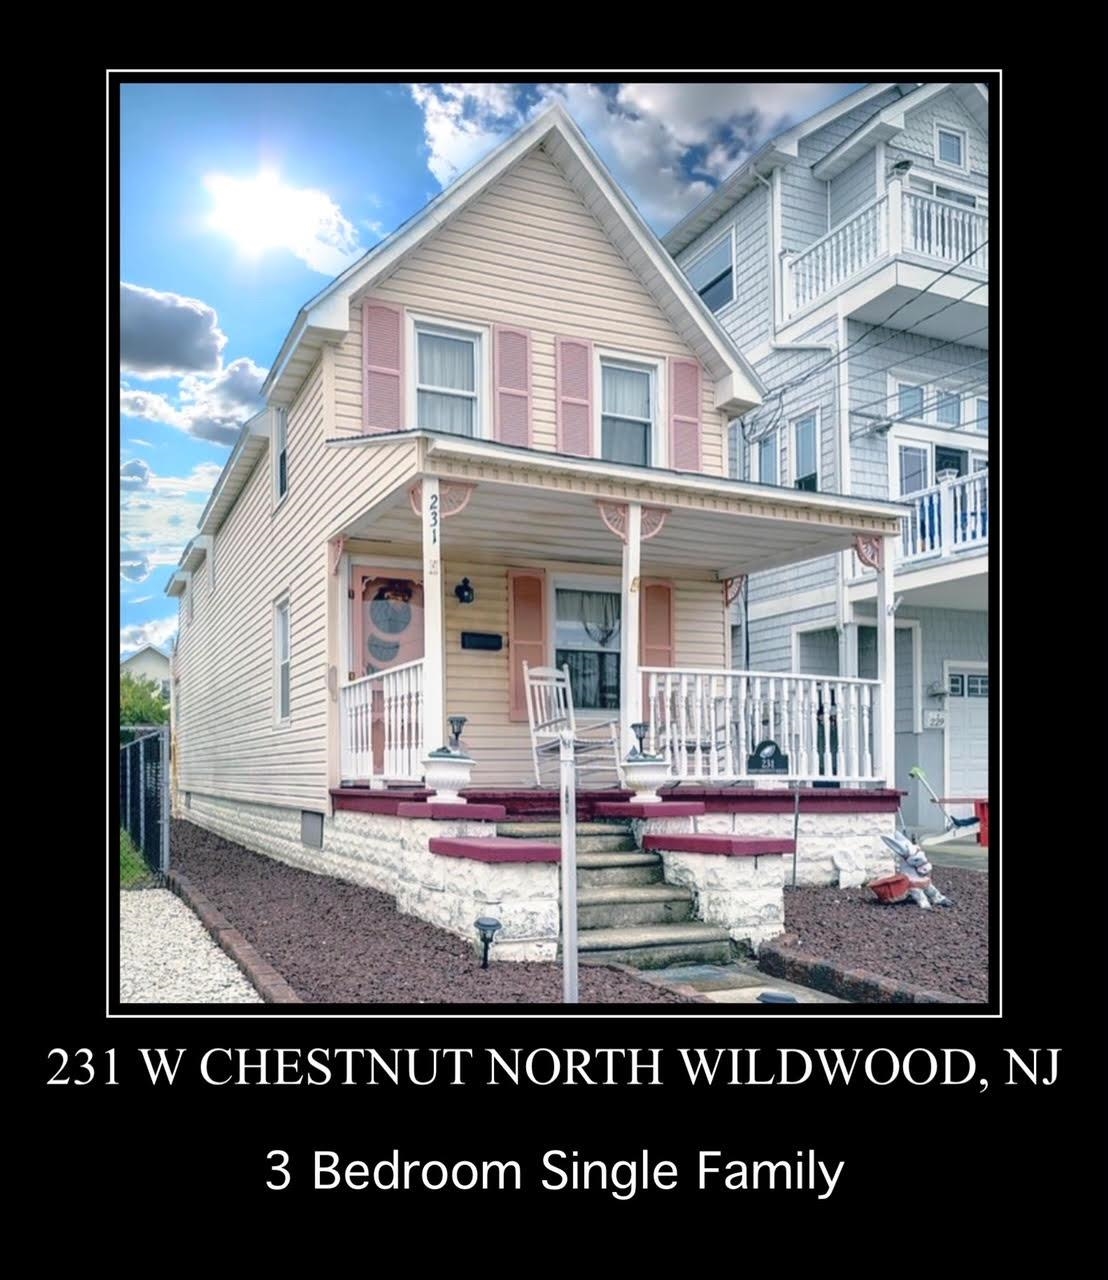 231 W Chestnut Avenue - North Wildwood